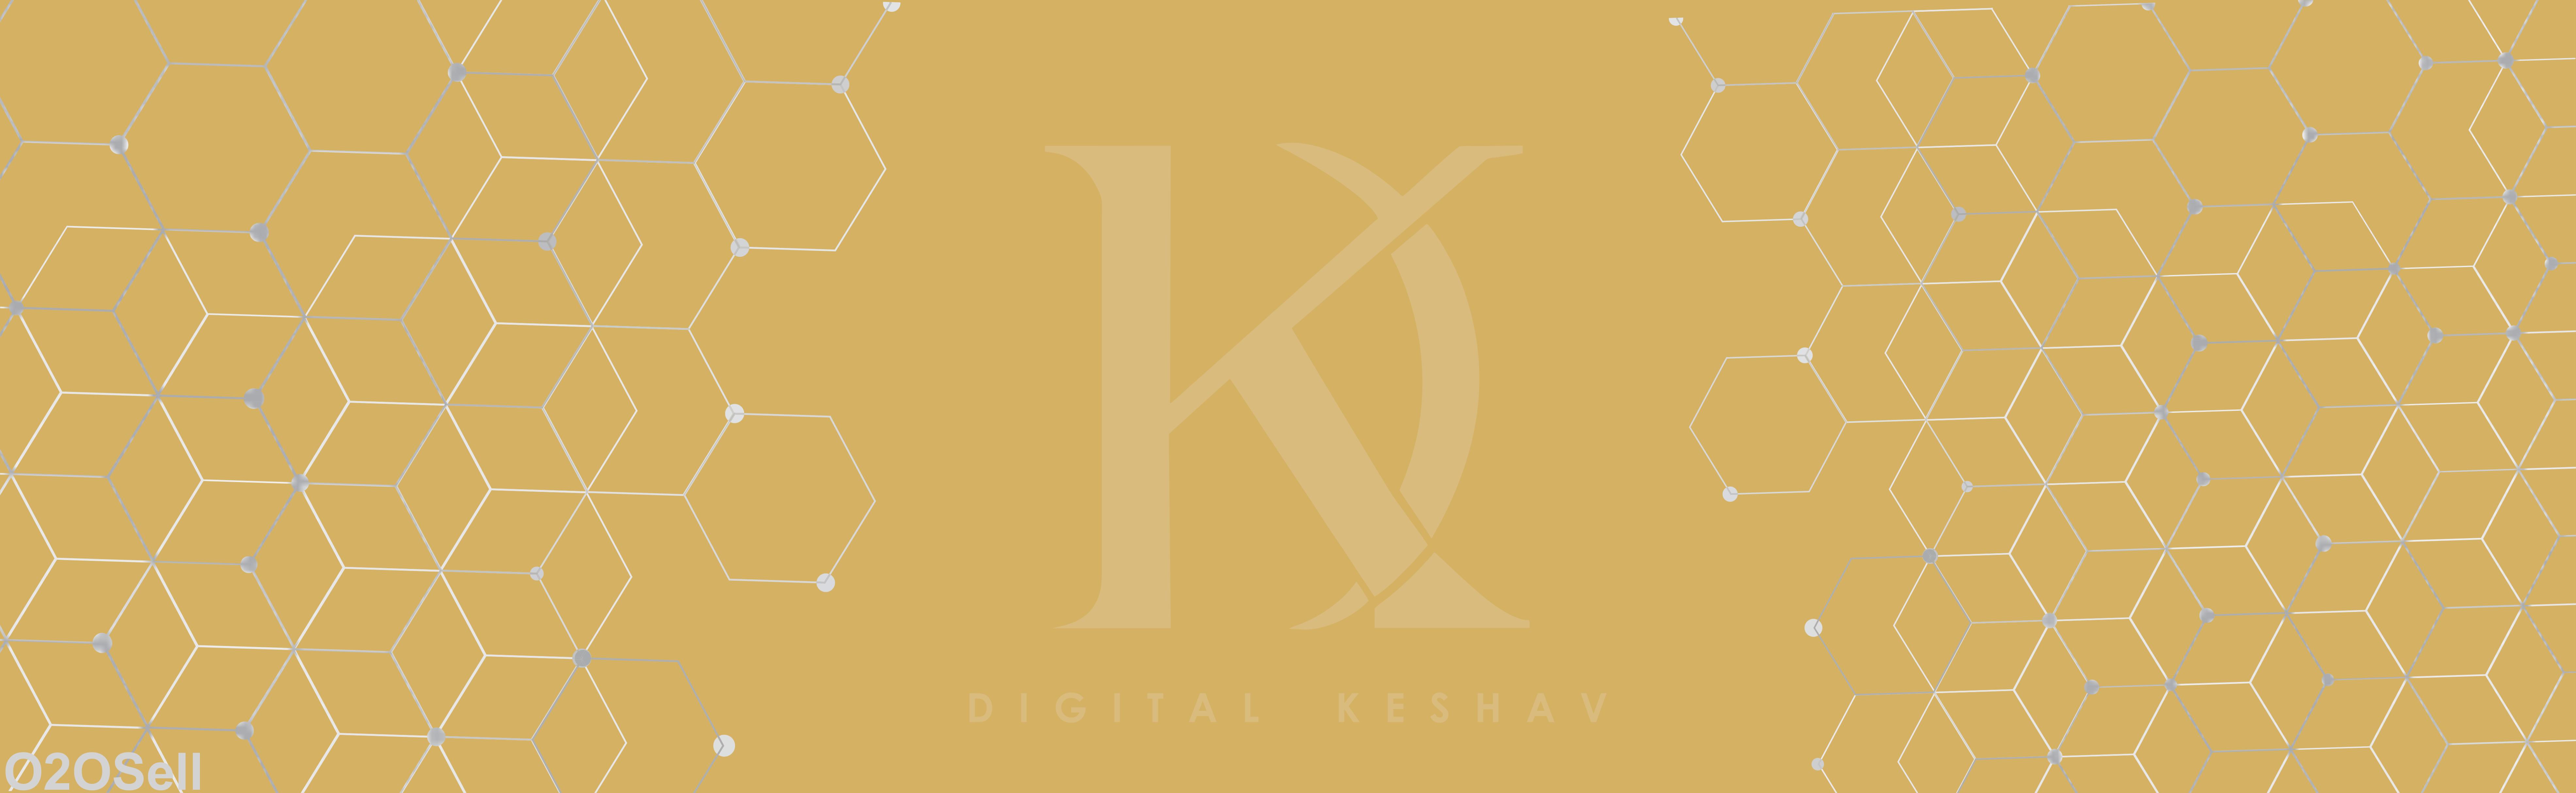 Digital Keshav | Digital Marketing Course in Vesu | Surat - Cover Image